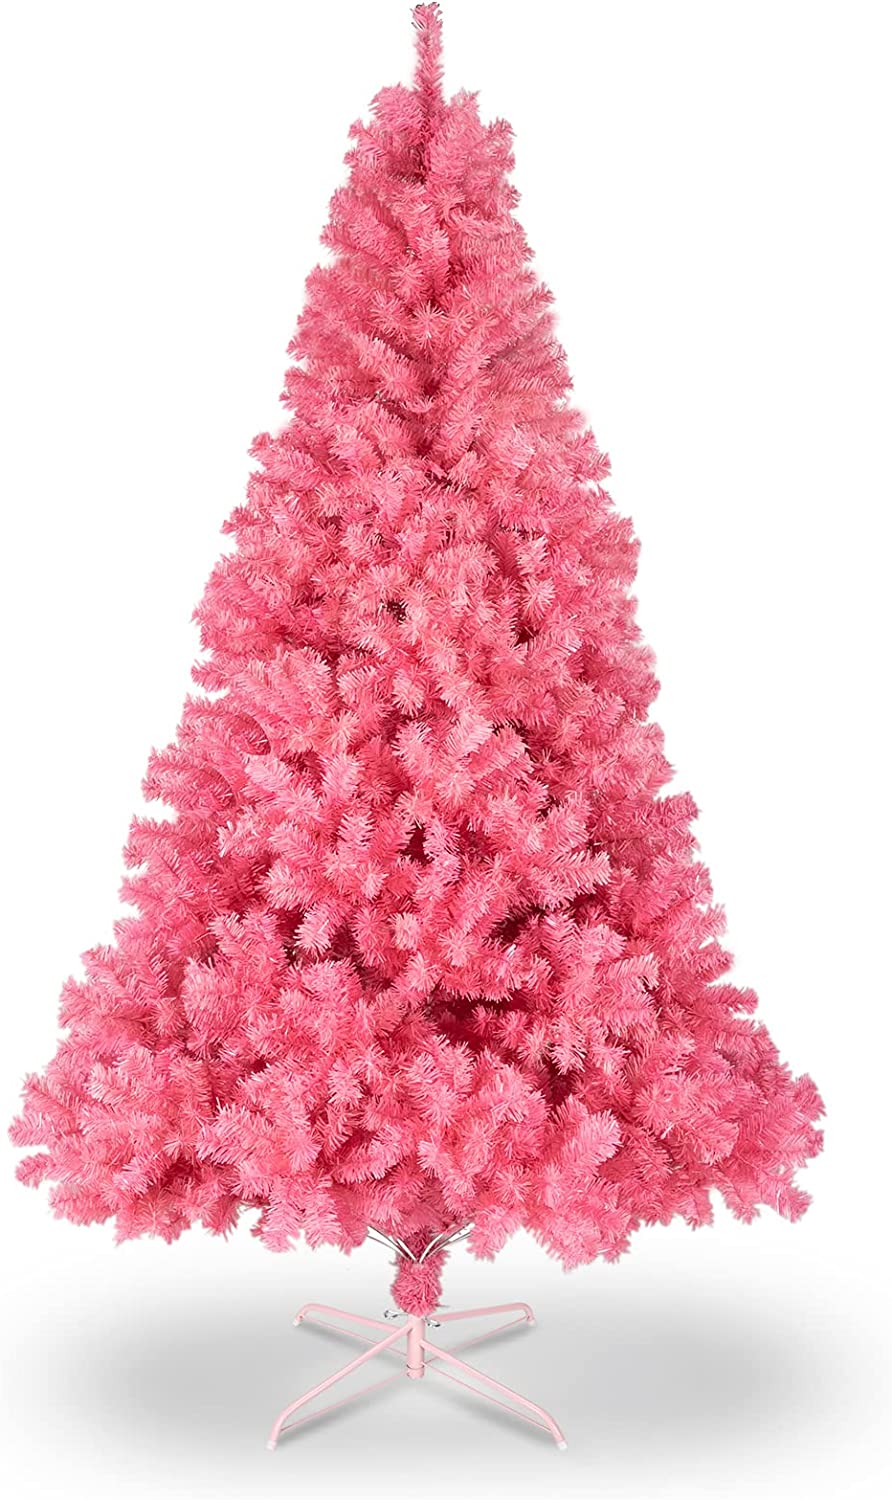  9. Bonnlo Snow Flocked Artificial Christmas Pine Tree 